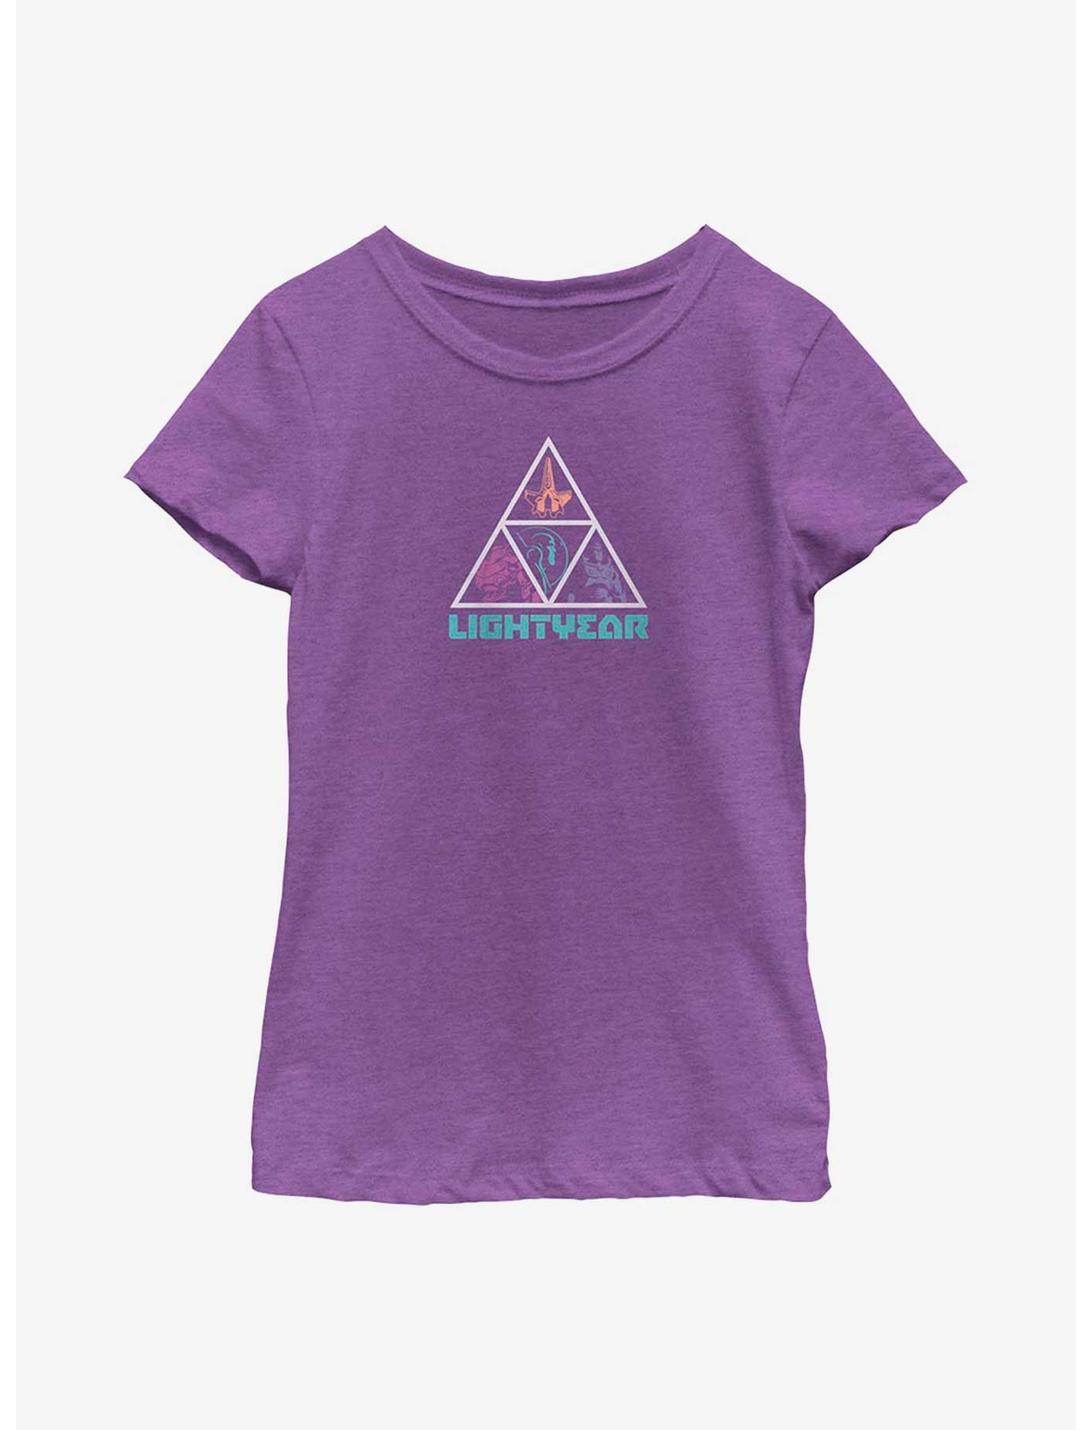 Disney Pixar Lightyear Pyramid Youth Girls T-Shirt, PURPLE BERRY, hi-res